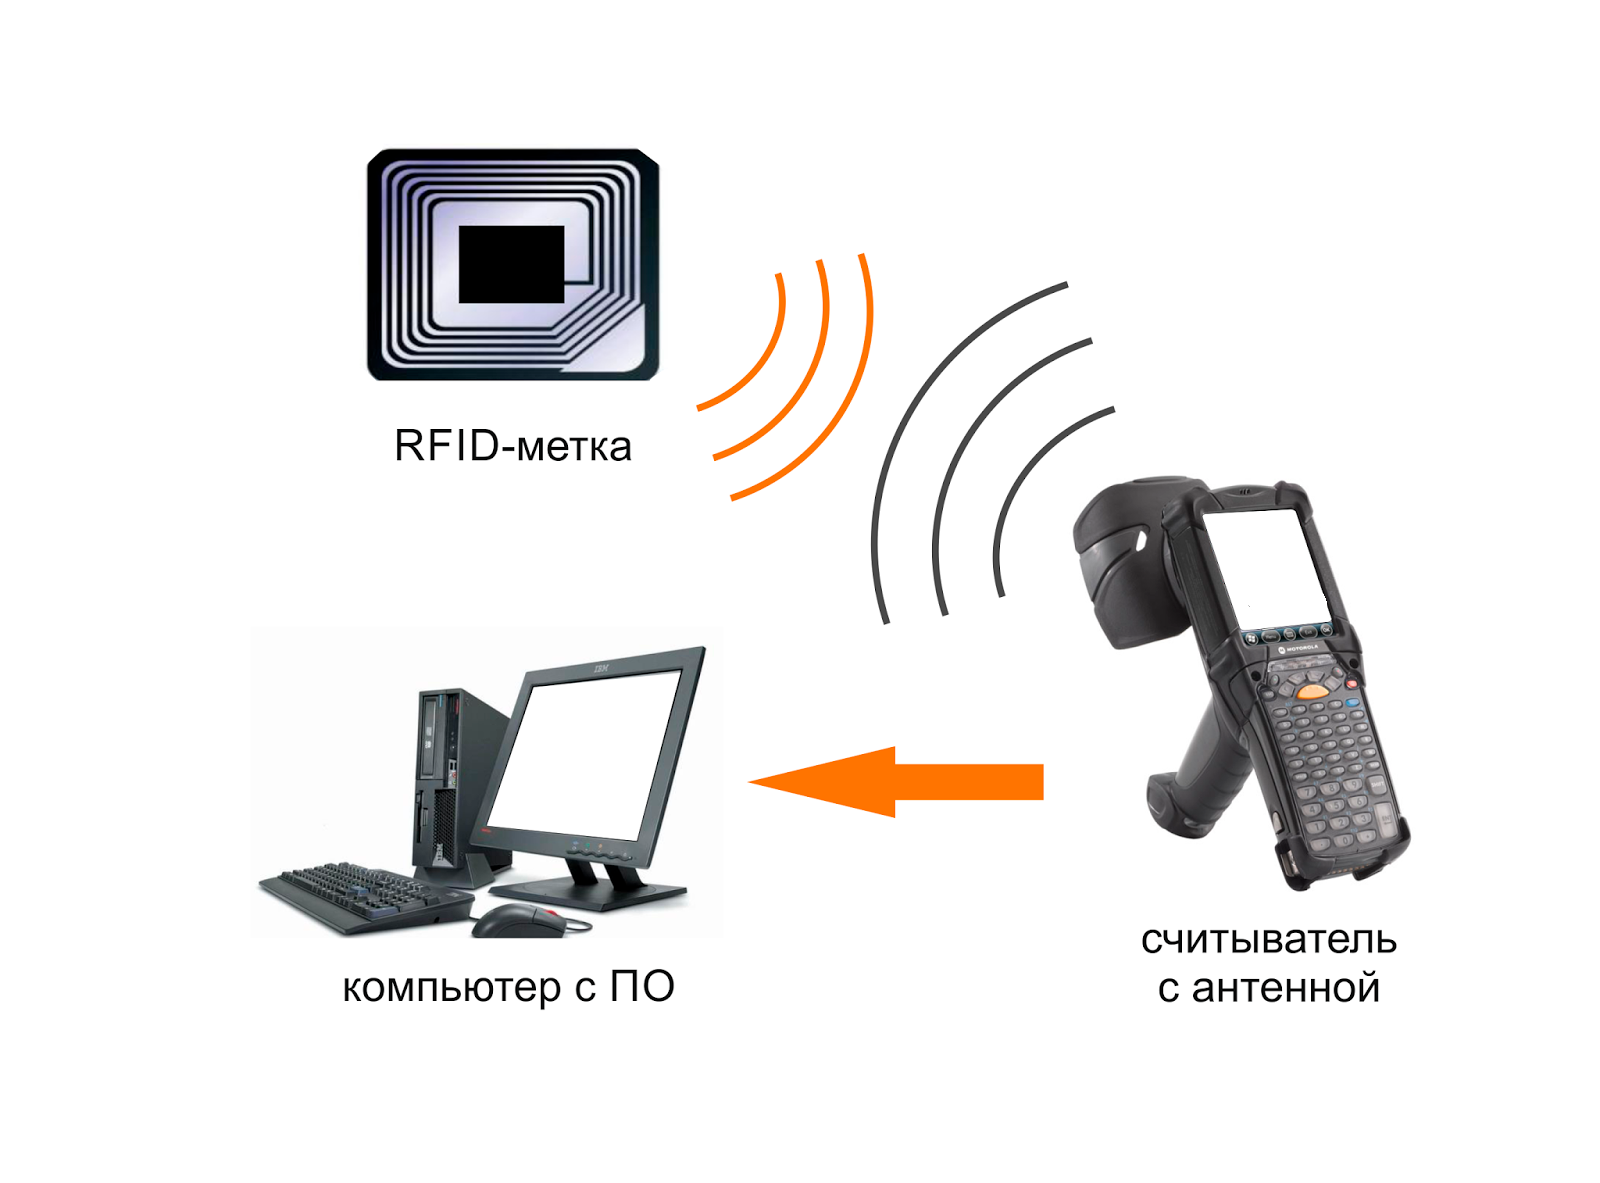 Применение RFID технологий